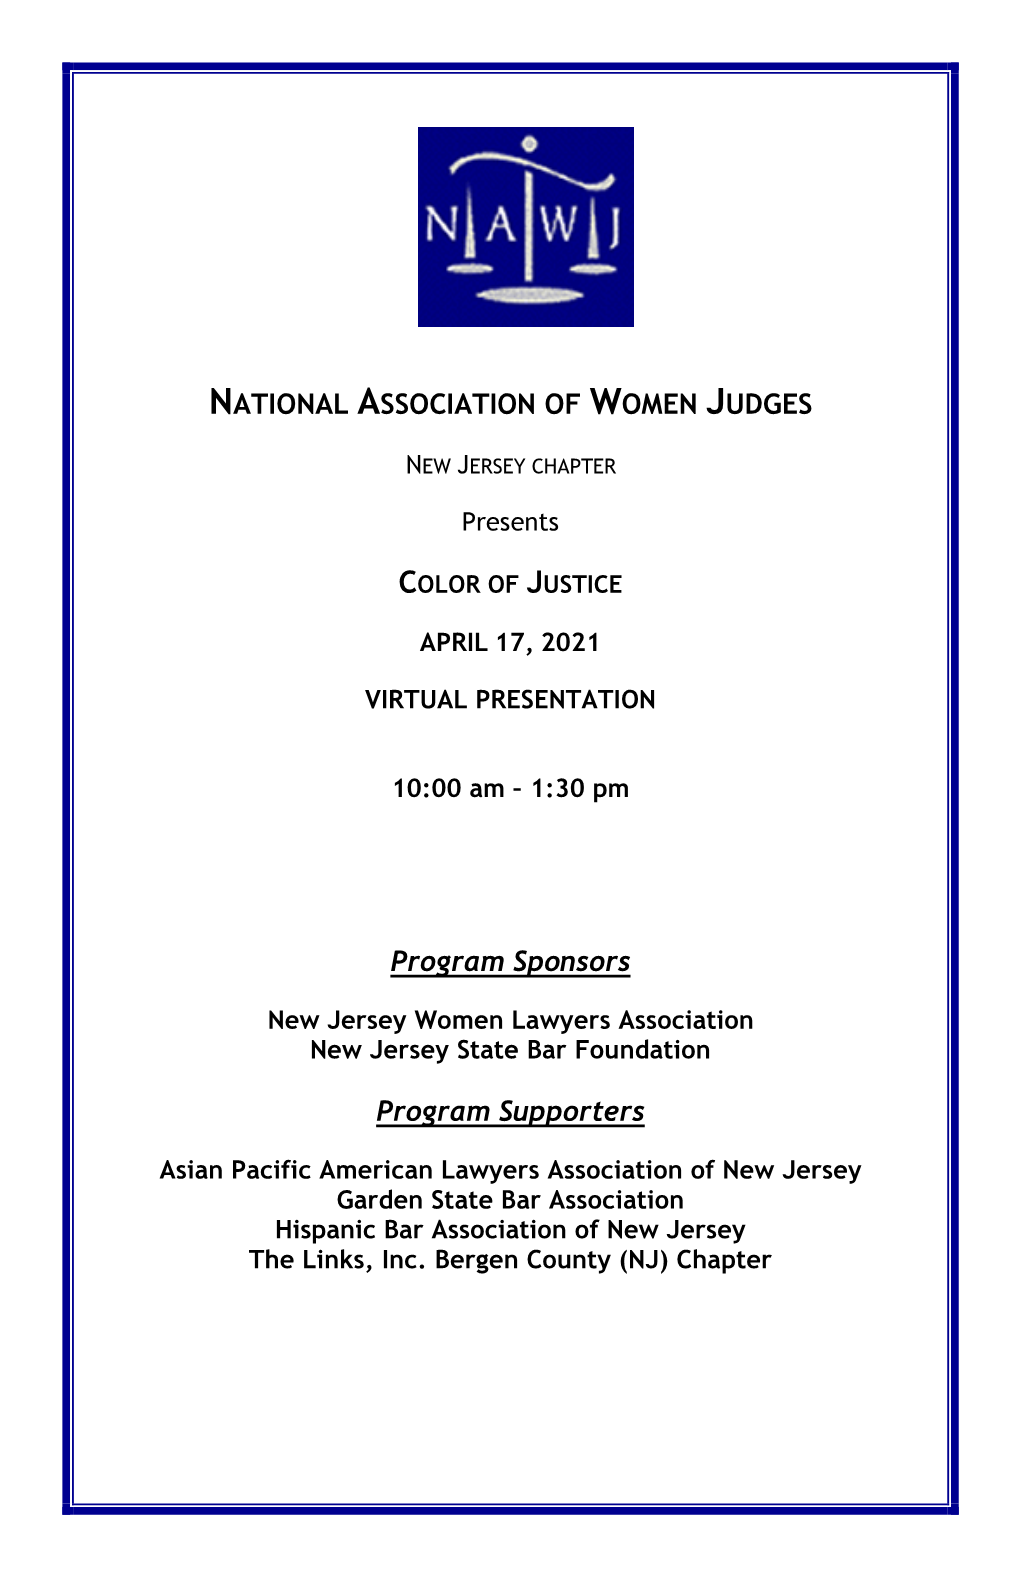 NATIONAL ASSOCIATION of WOMEN JUDGES Program